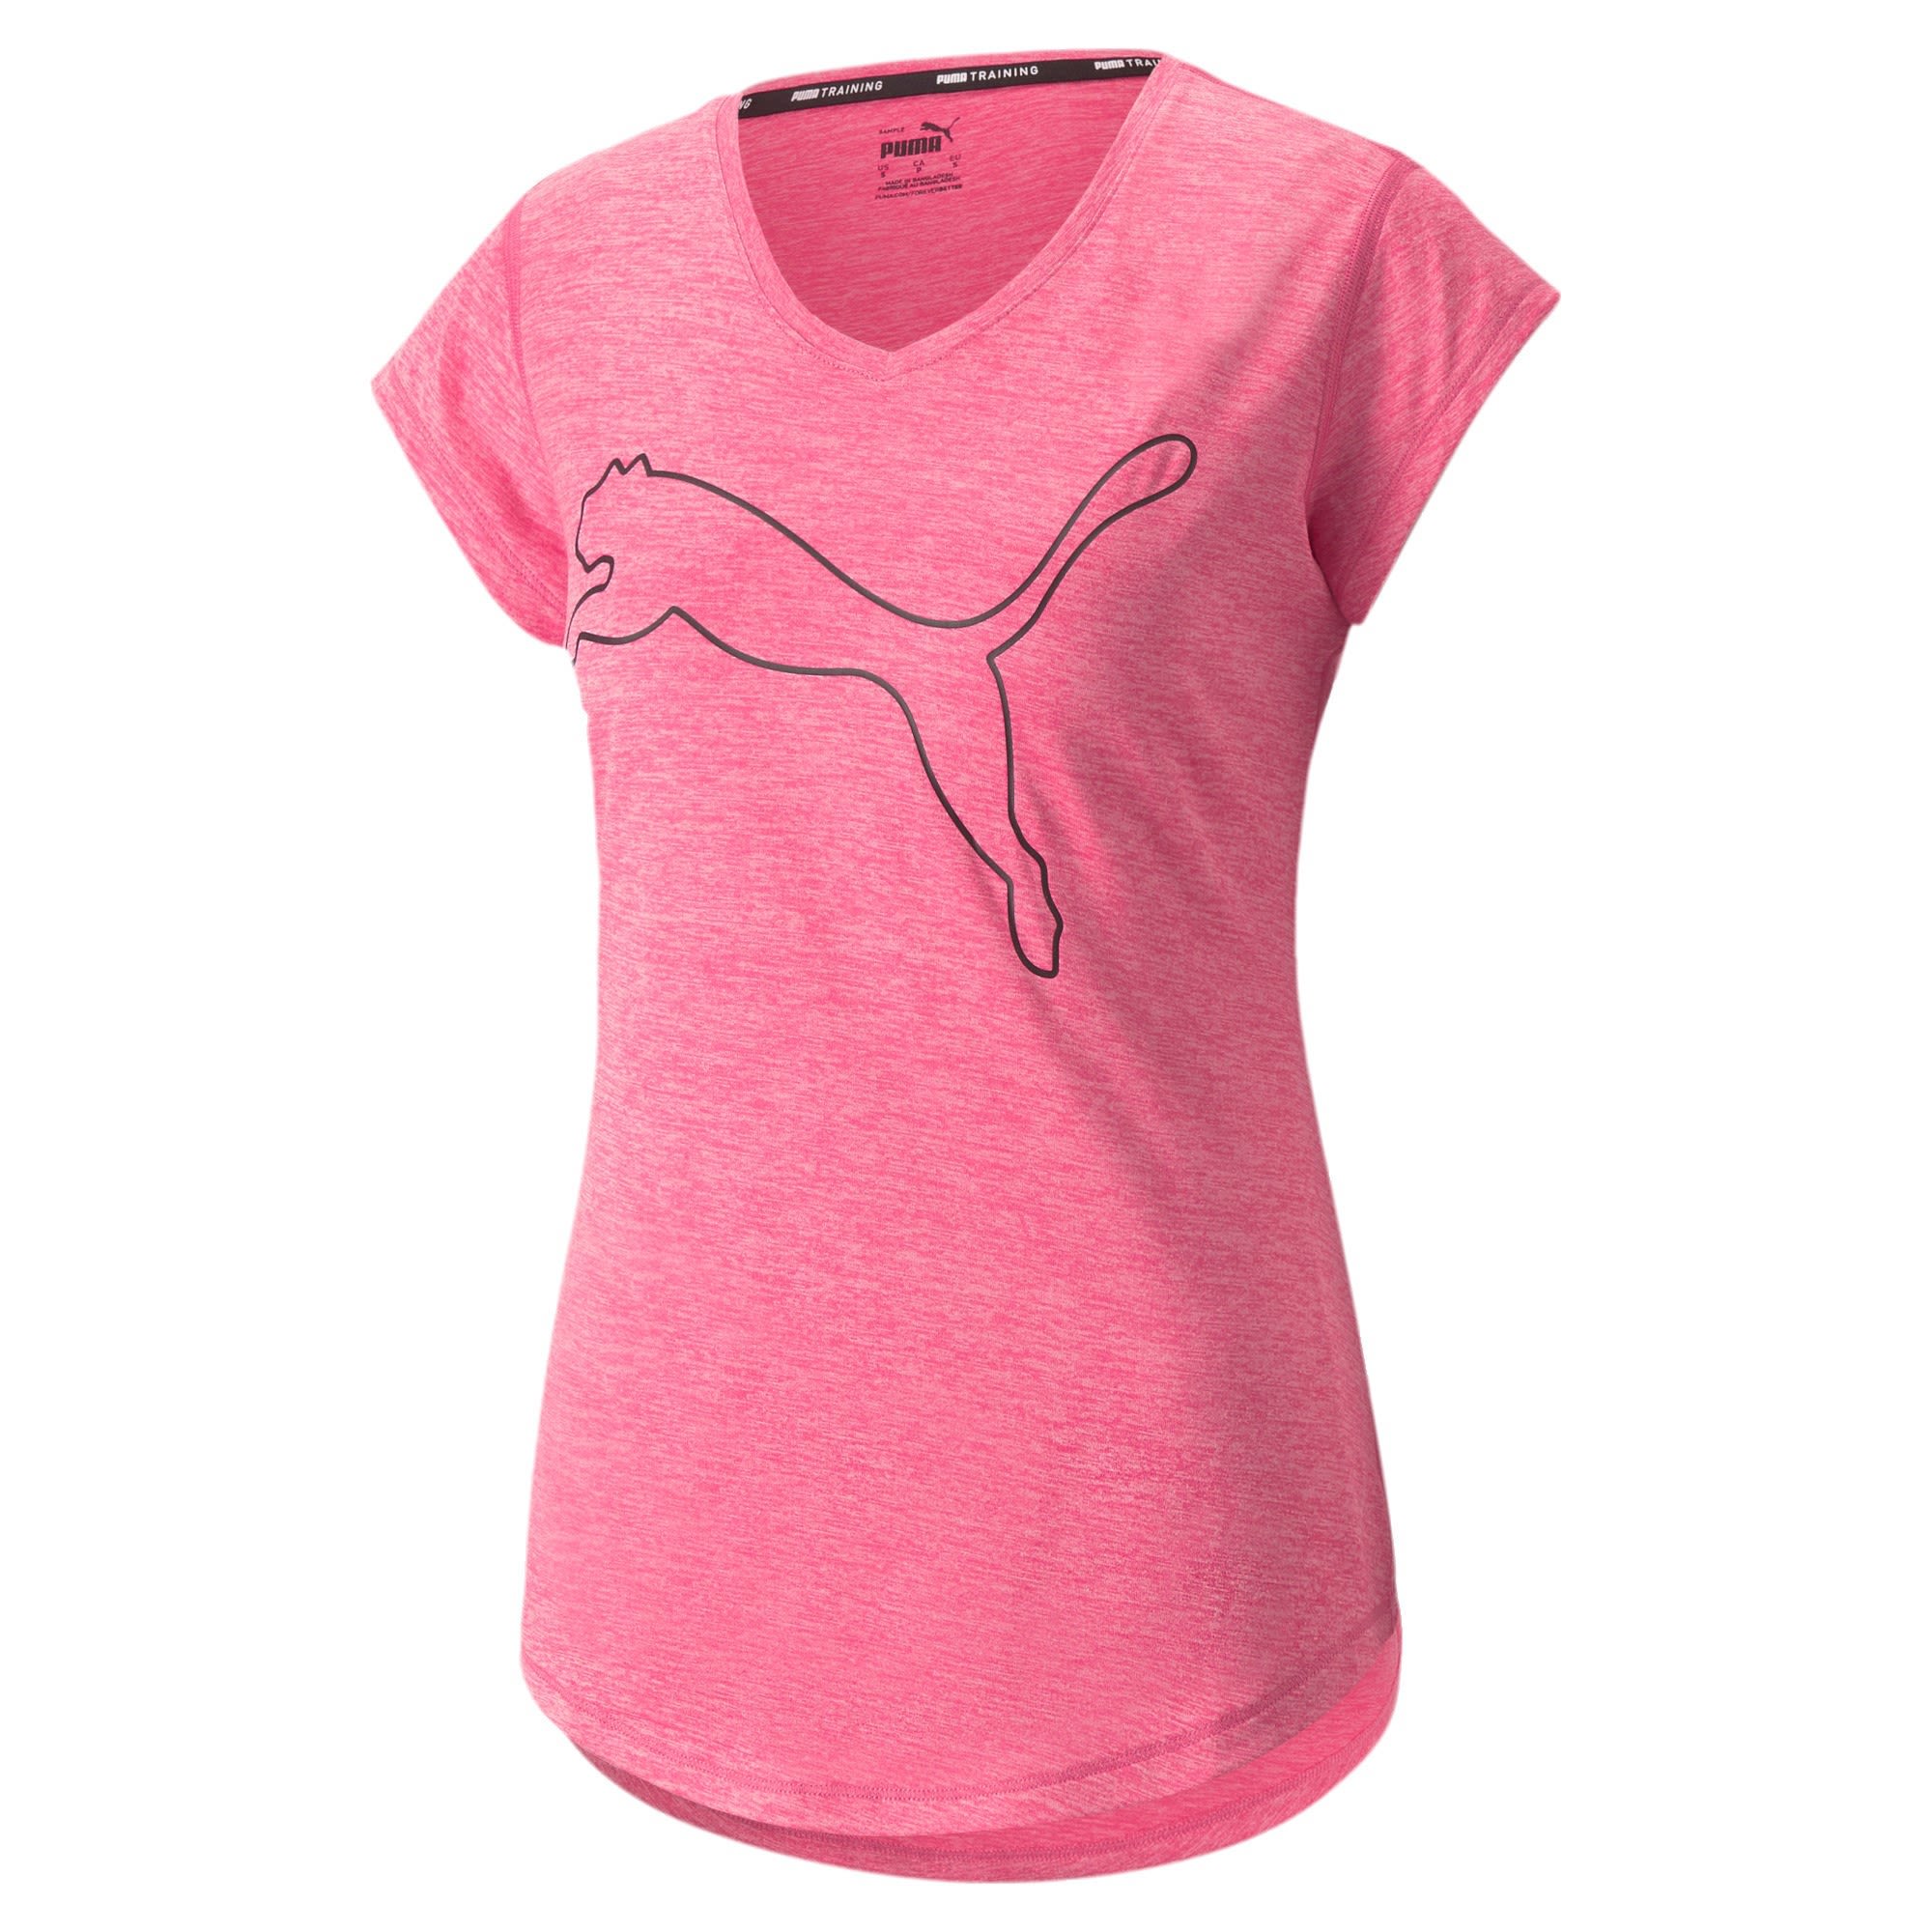 Puma Train Favorite Heather CAT Tee Pink- Female Kurzarm-Shirts- Grsse XXL - Farbe Sunset Pink Heather - Outline Cat